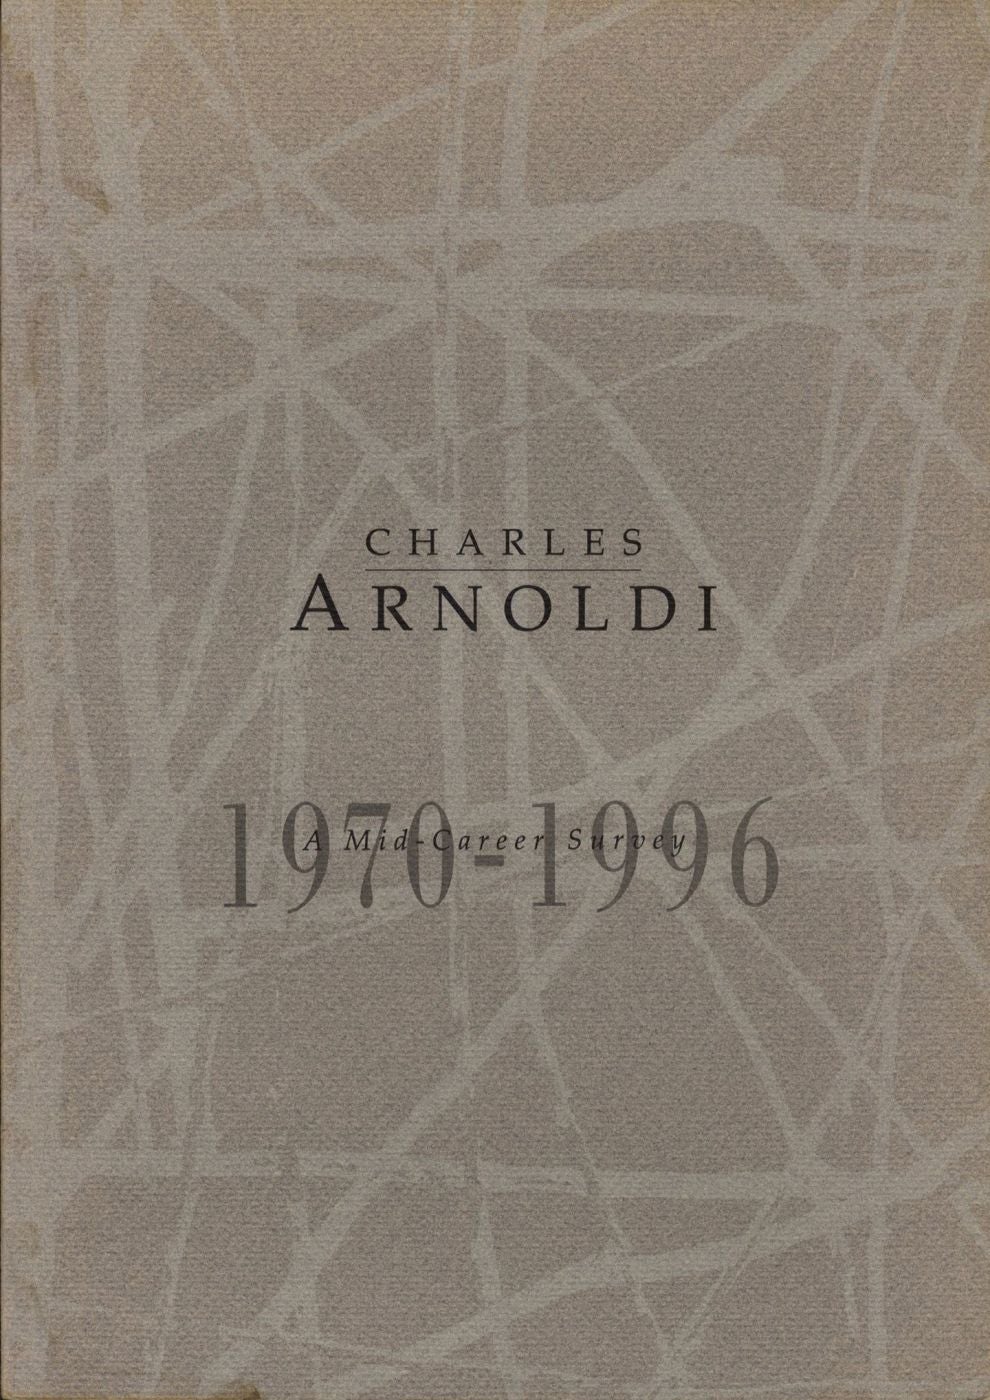 Charles Arnoldi: A Mid-Career Survey 1970-1996